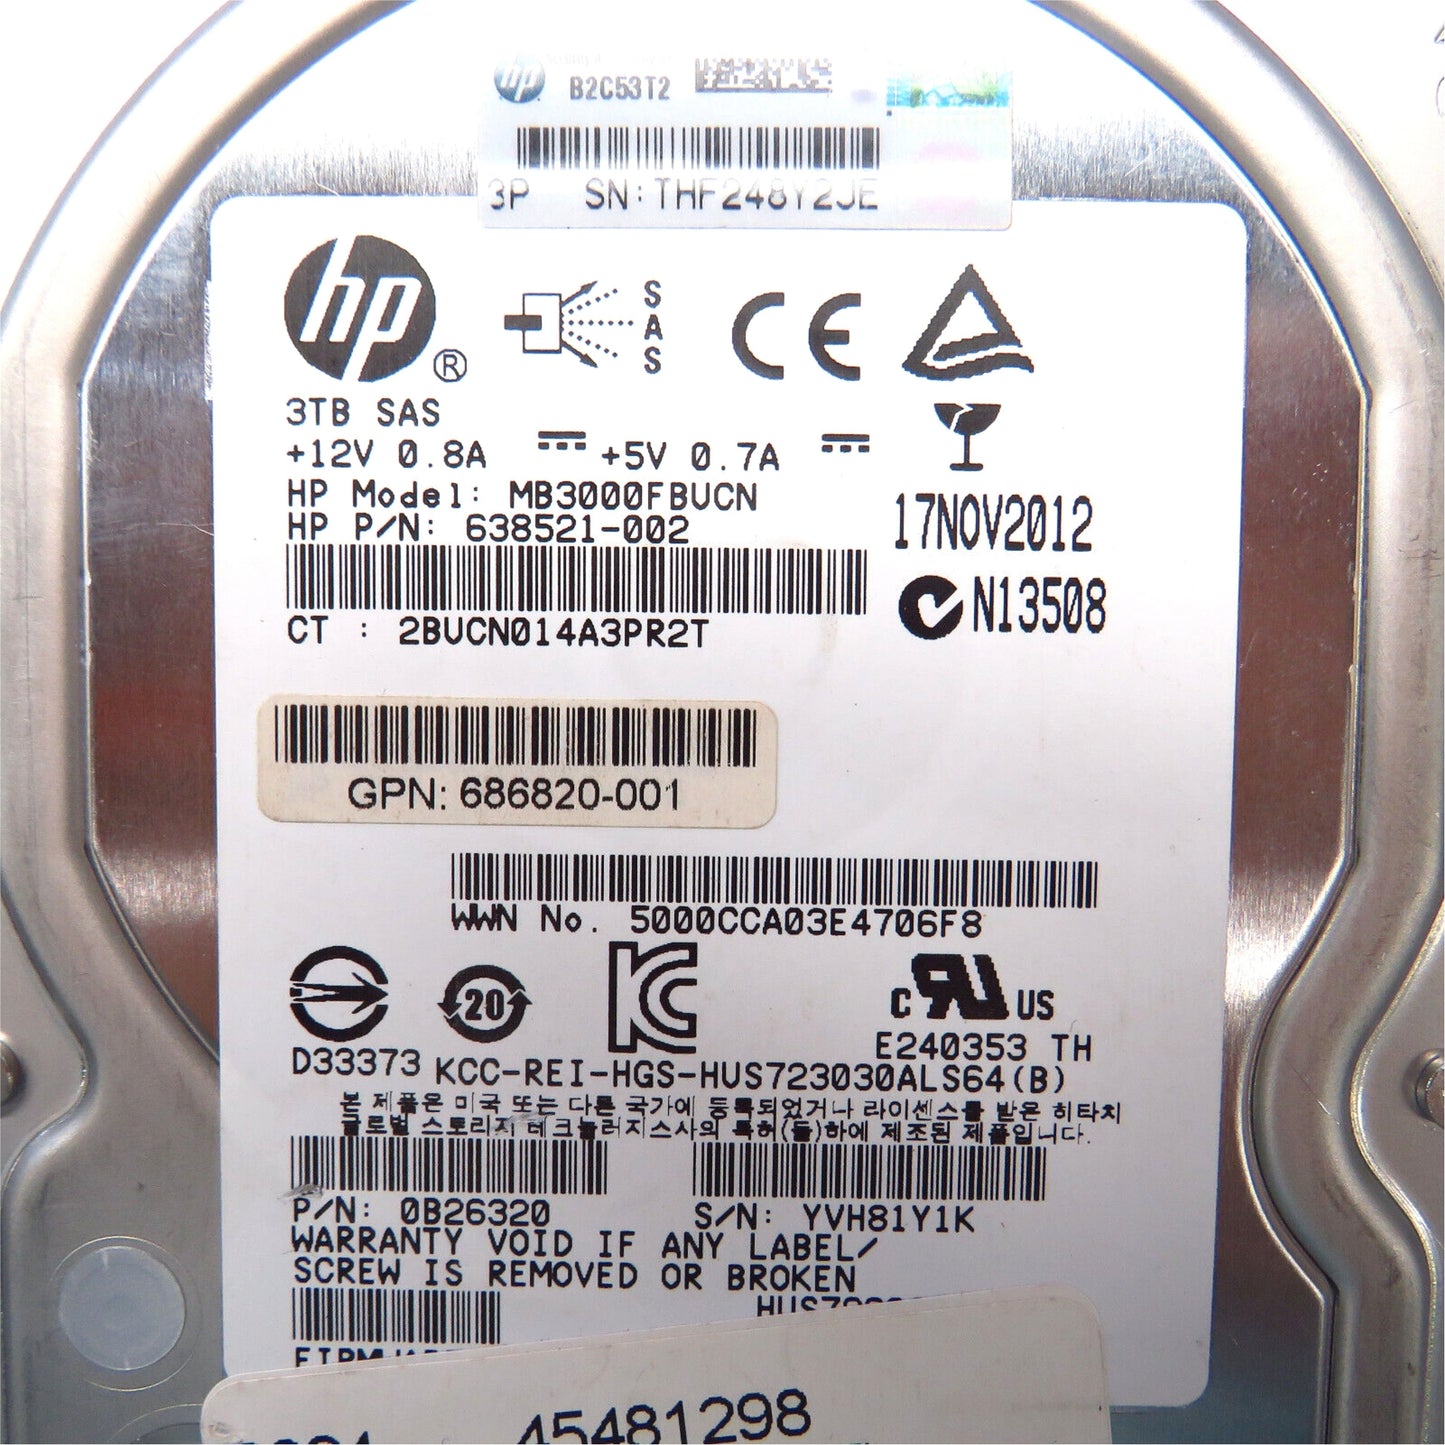 HP 687045-001 3.5" 3TB 7200RPM SAS 6Gb/s Hard Disk Drive (HDD), Silver (Refurbished)